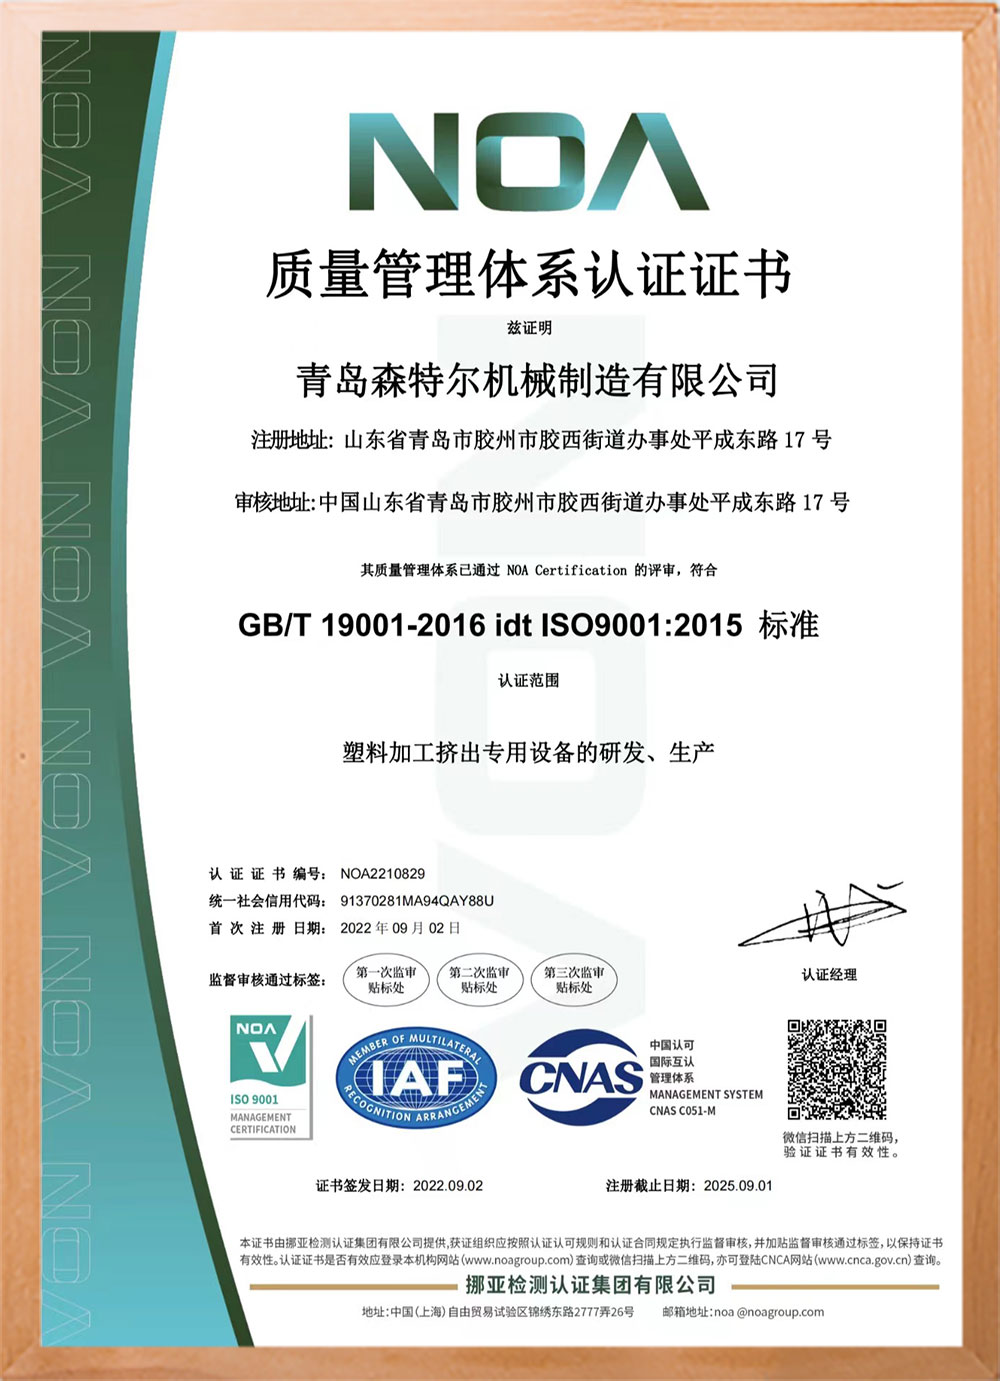 certificate3lg2